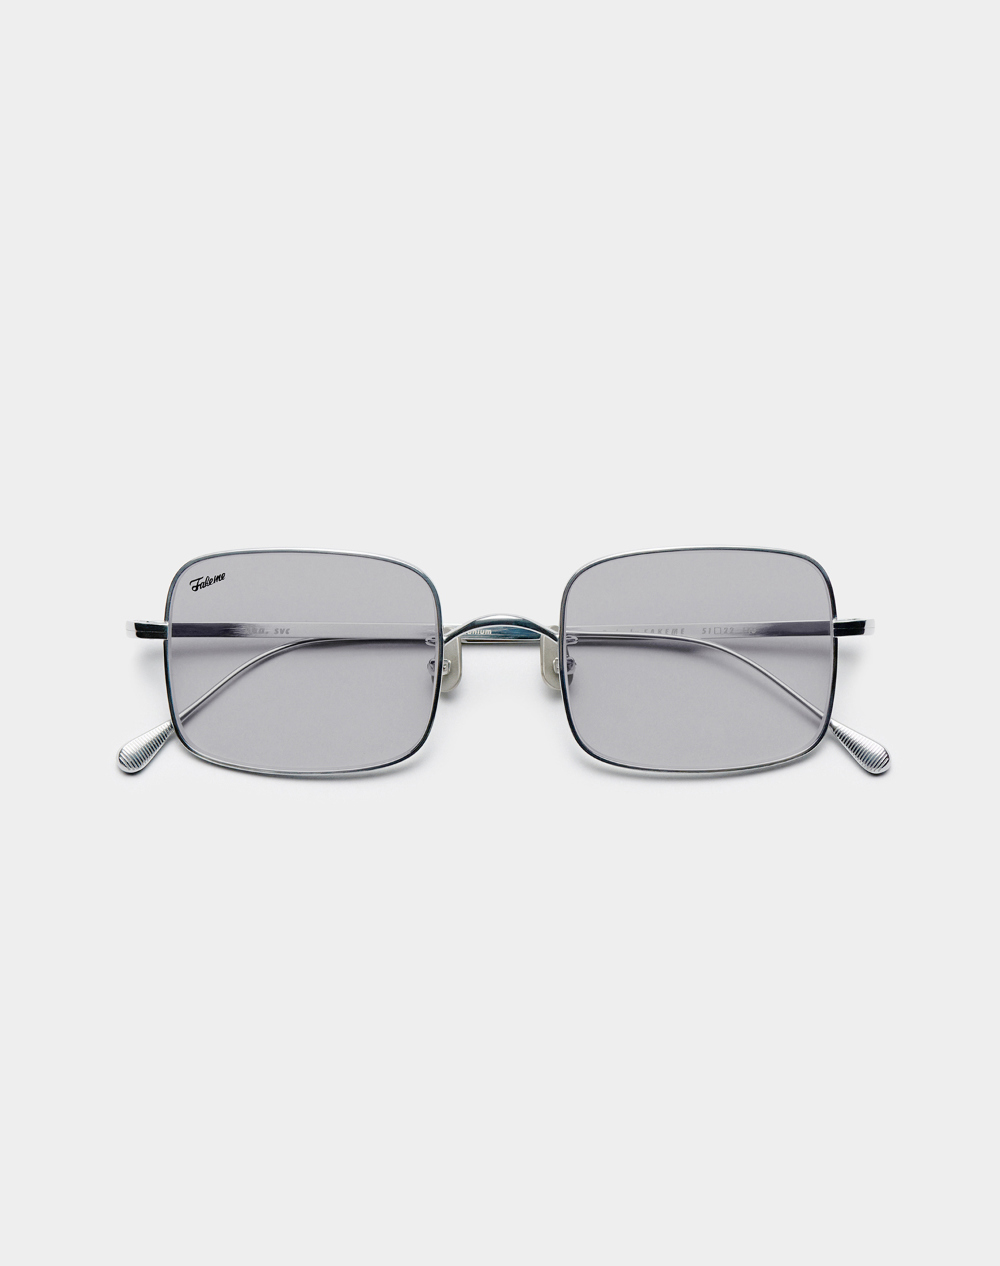 glasses grey color image-S1L6